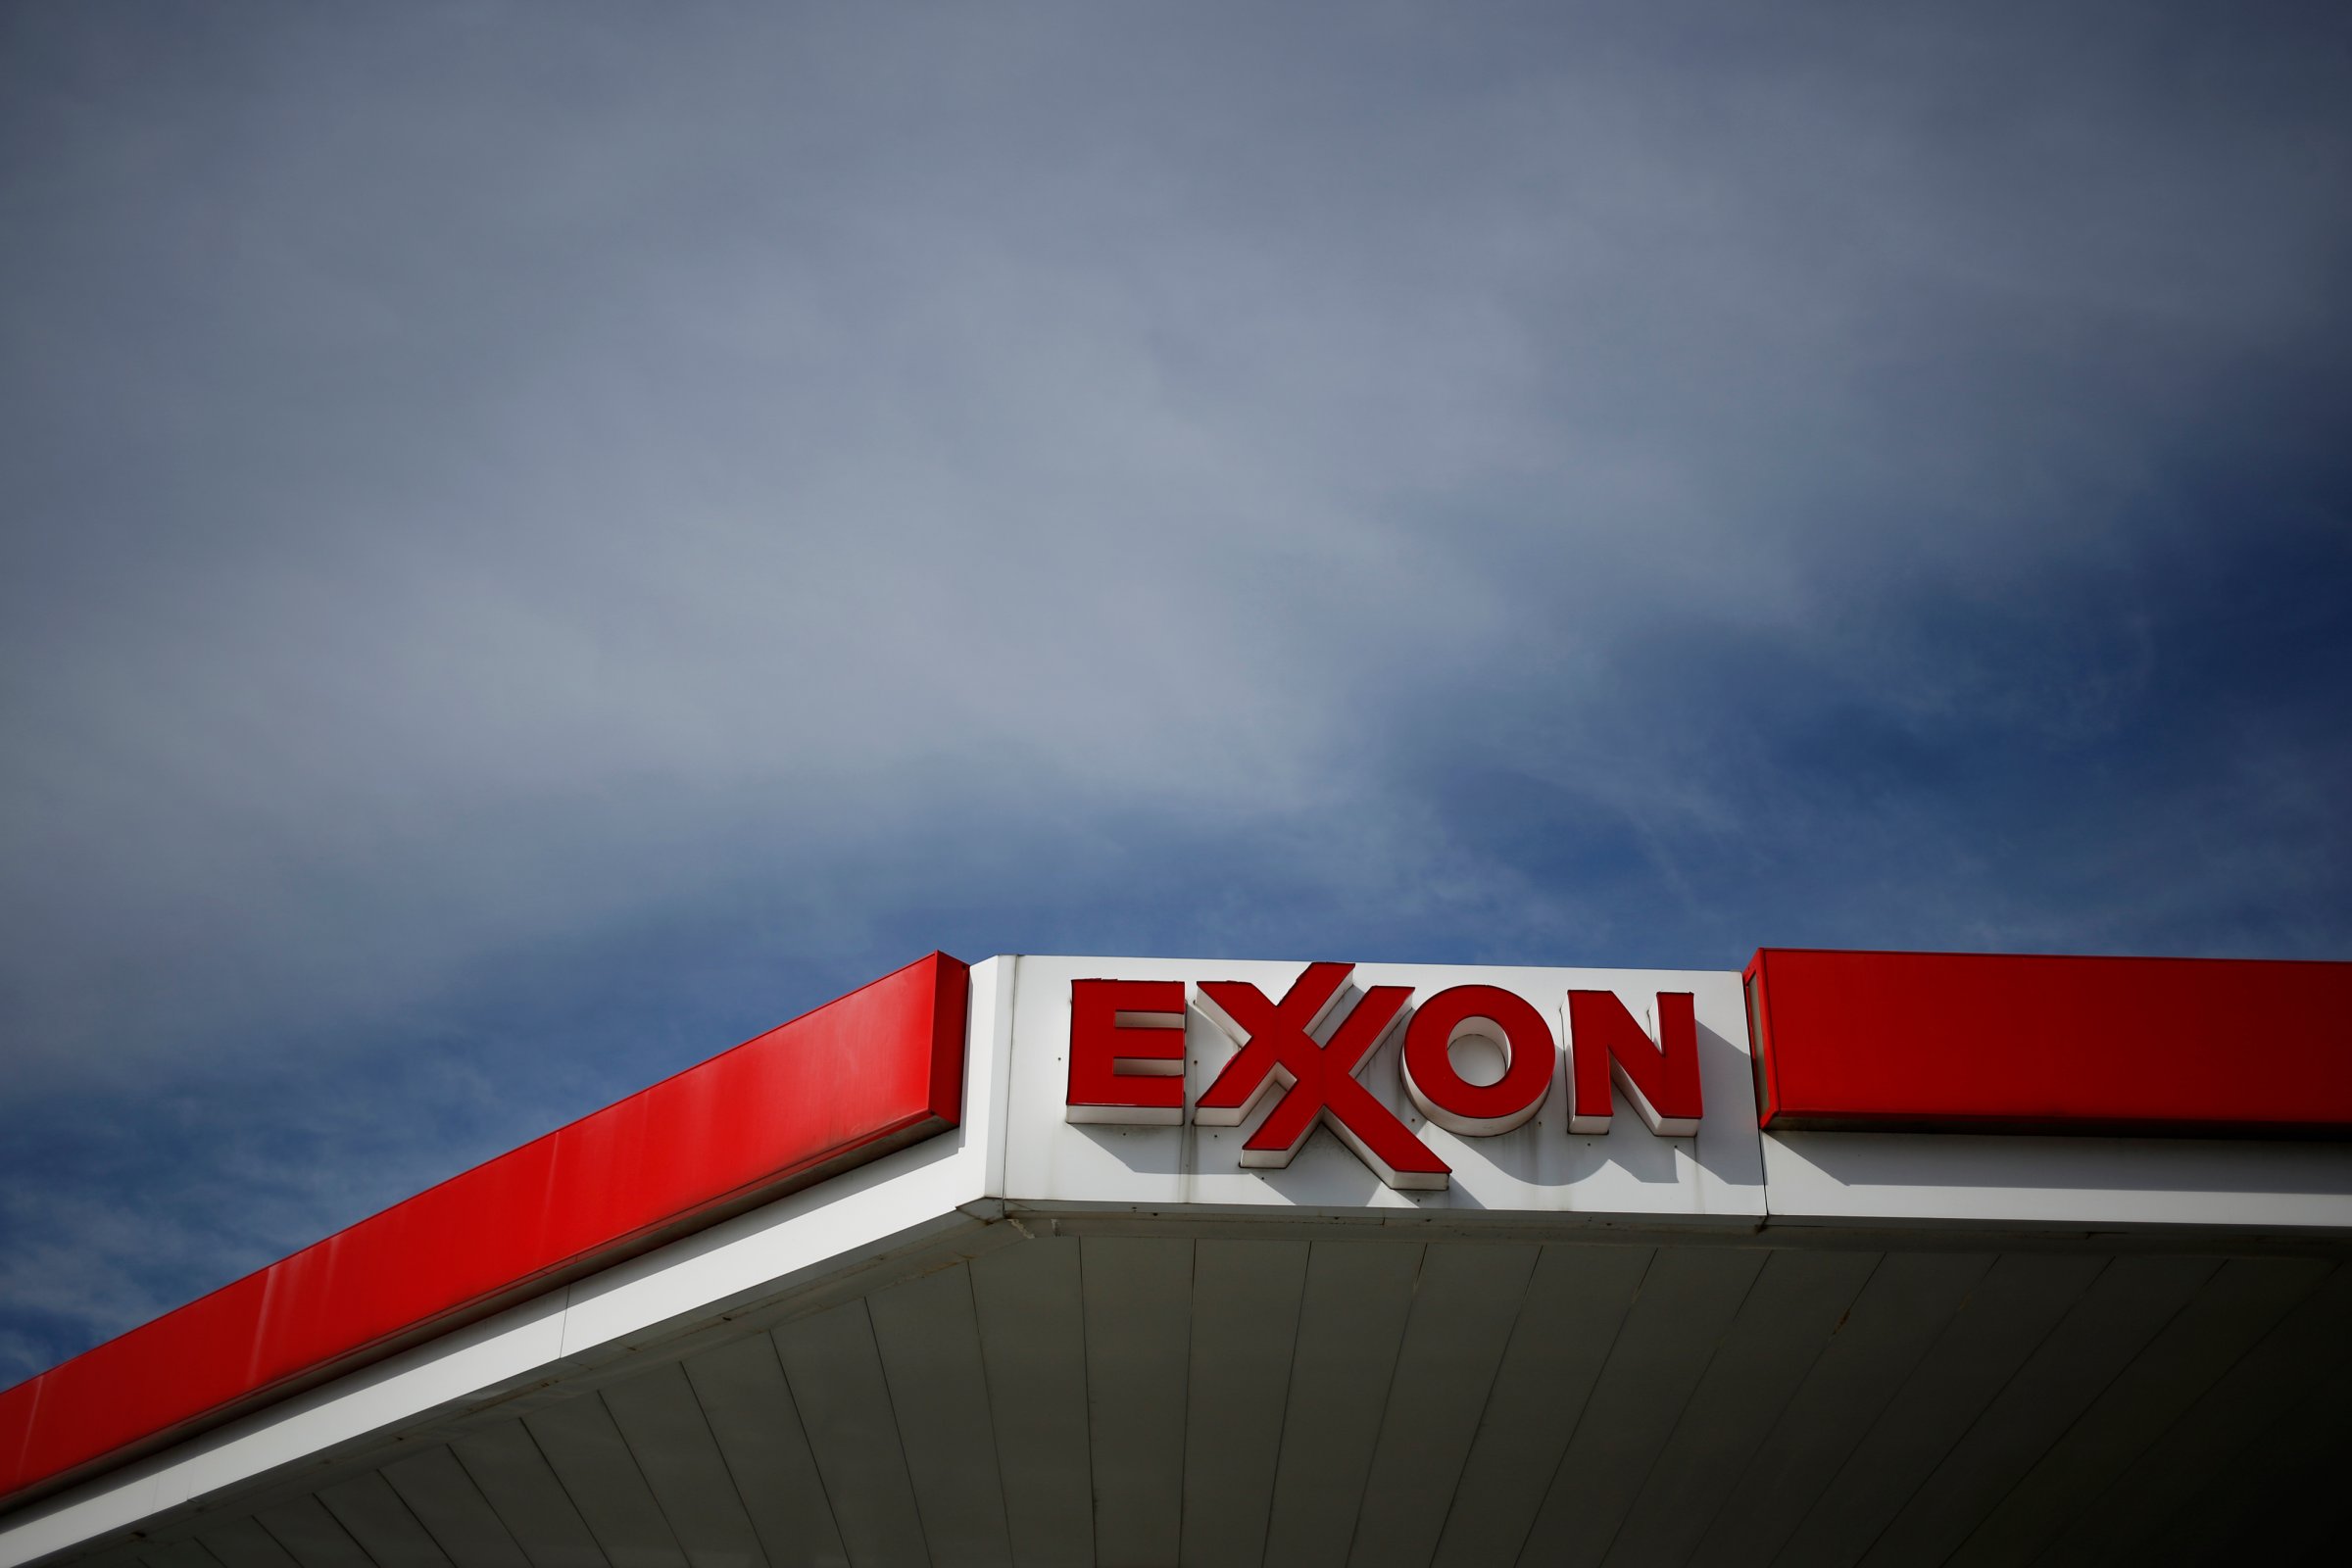 An Exxon gas station in Cincinnati, on Jan. 27, 2014.